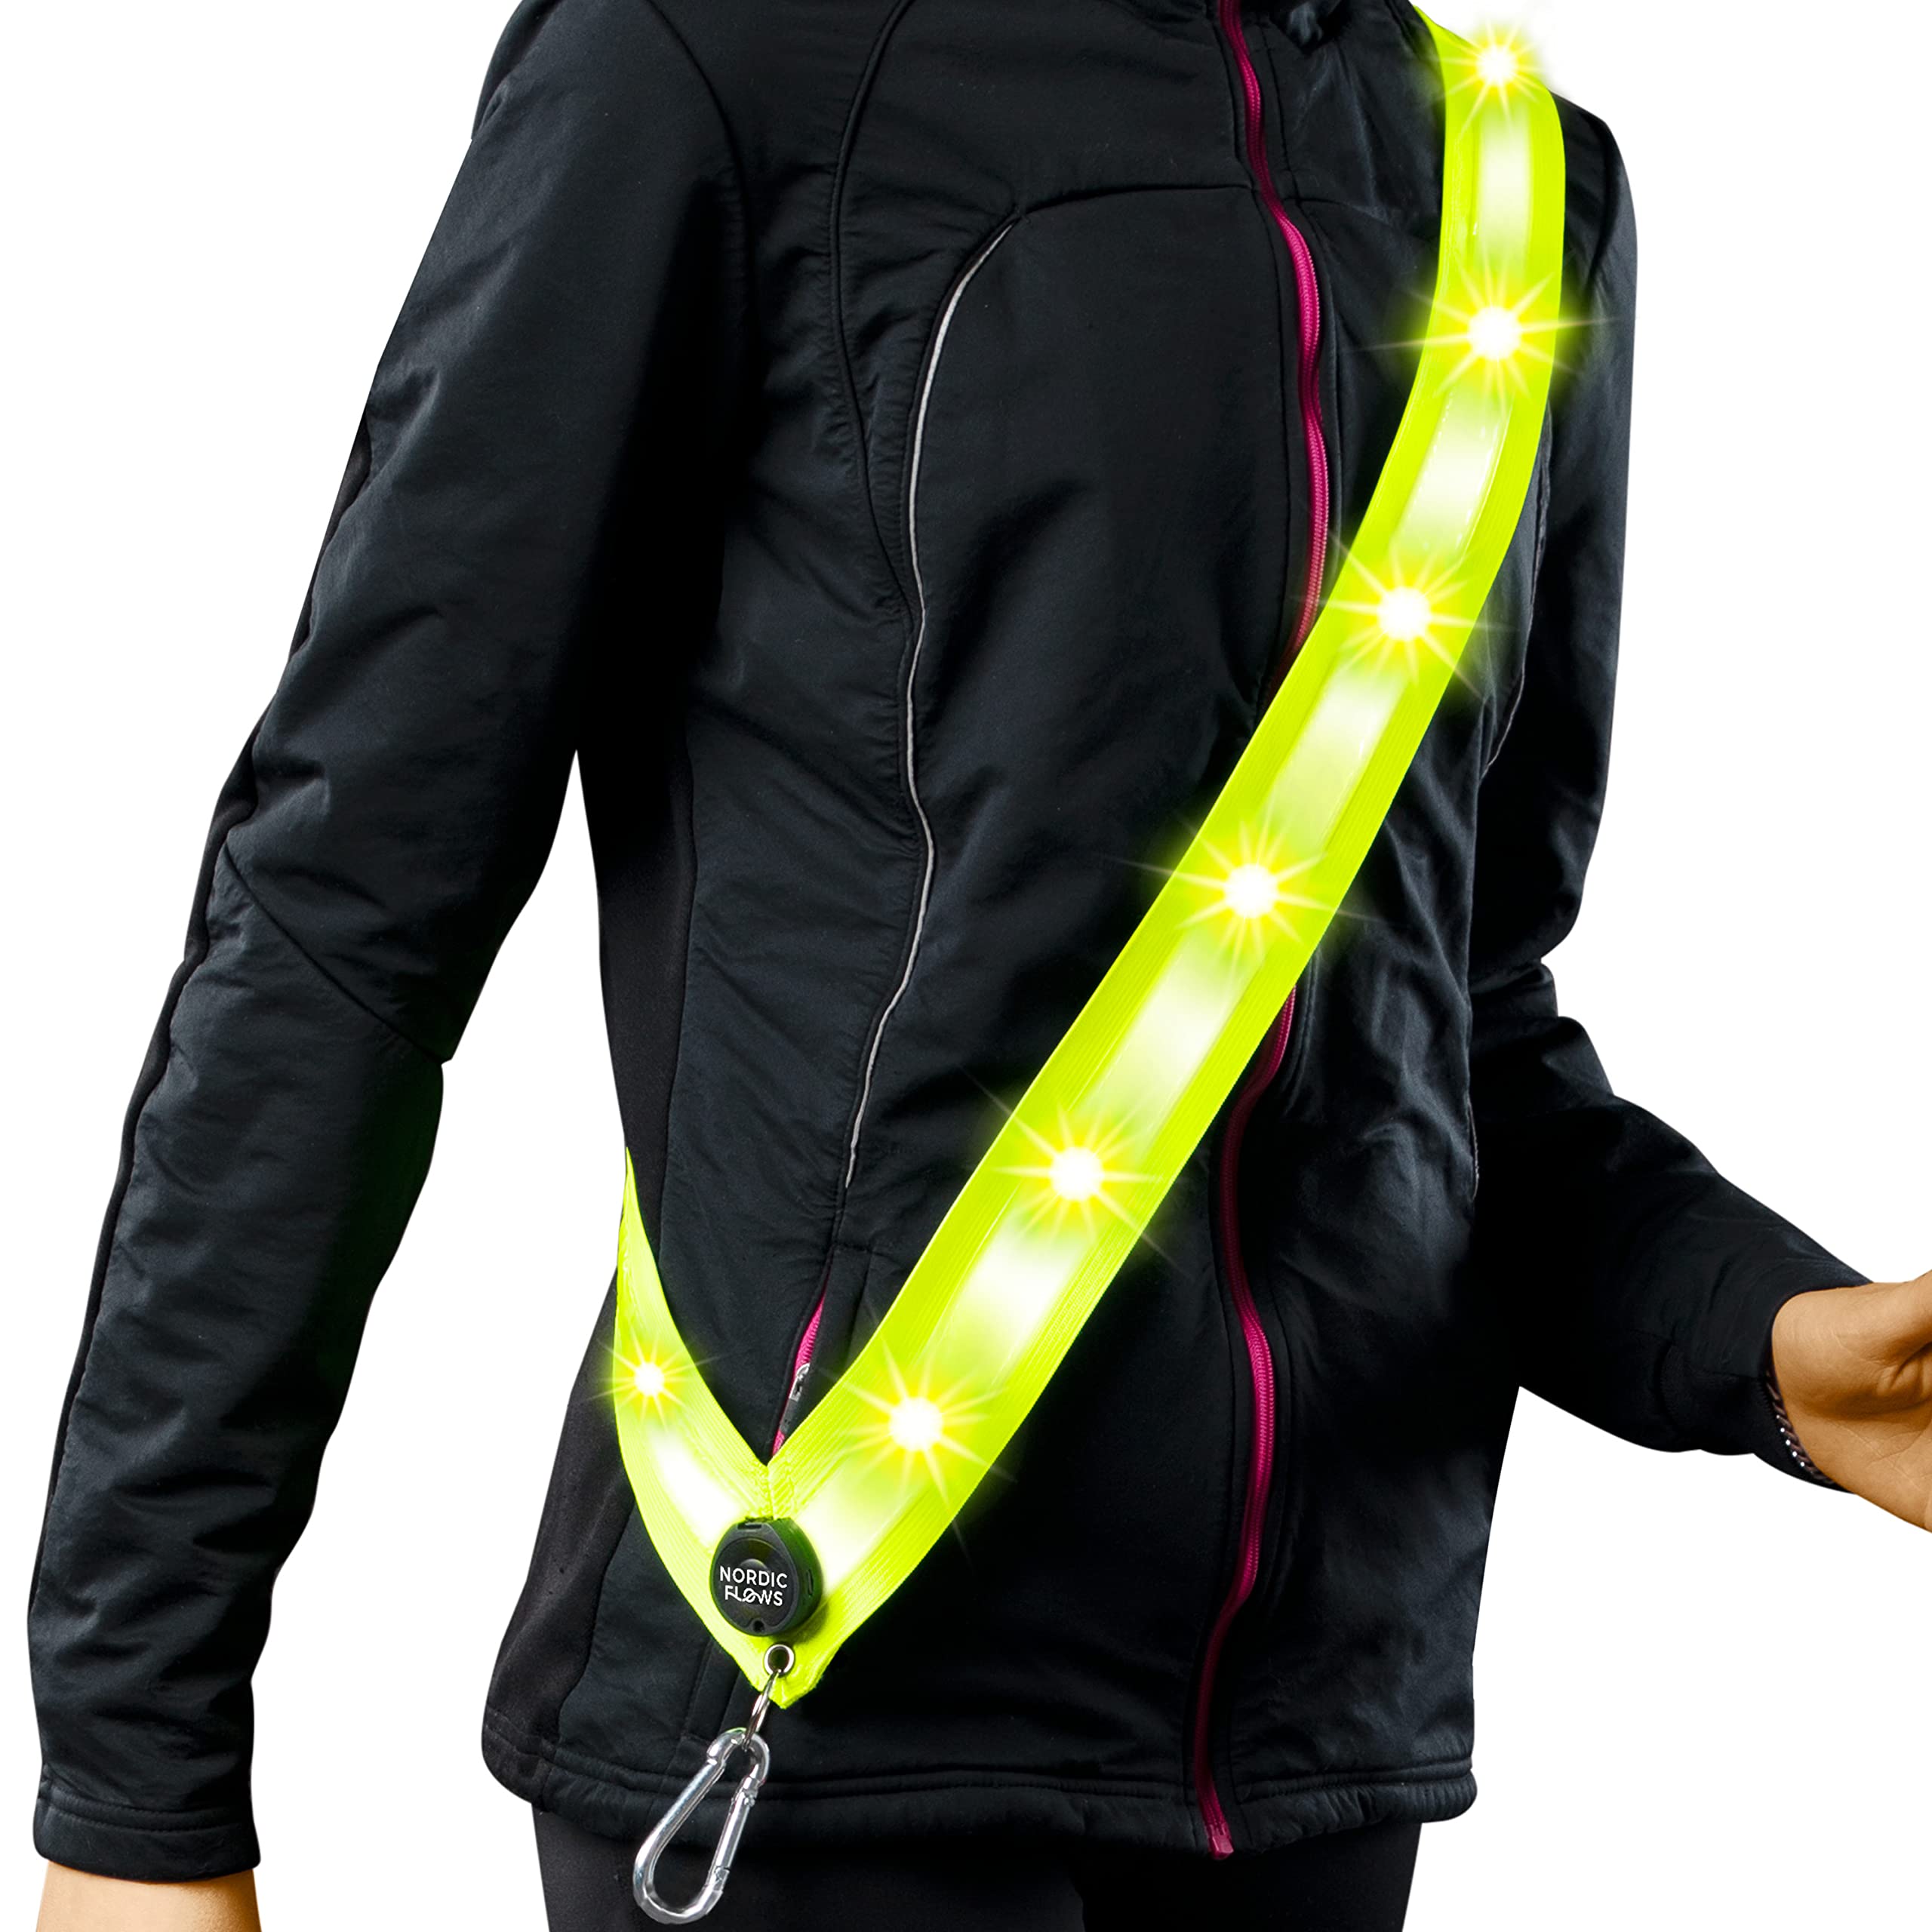  LONGU Led Running Reflective Vest Safety Night Light